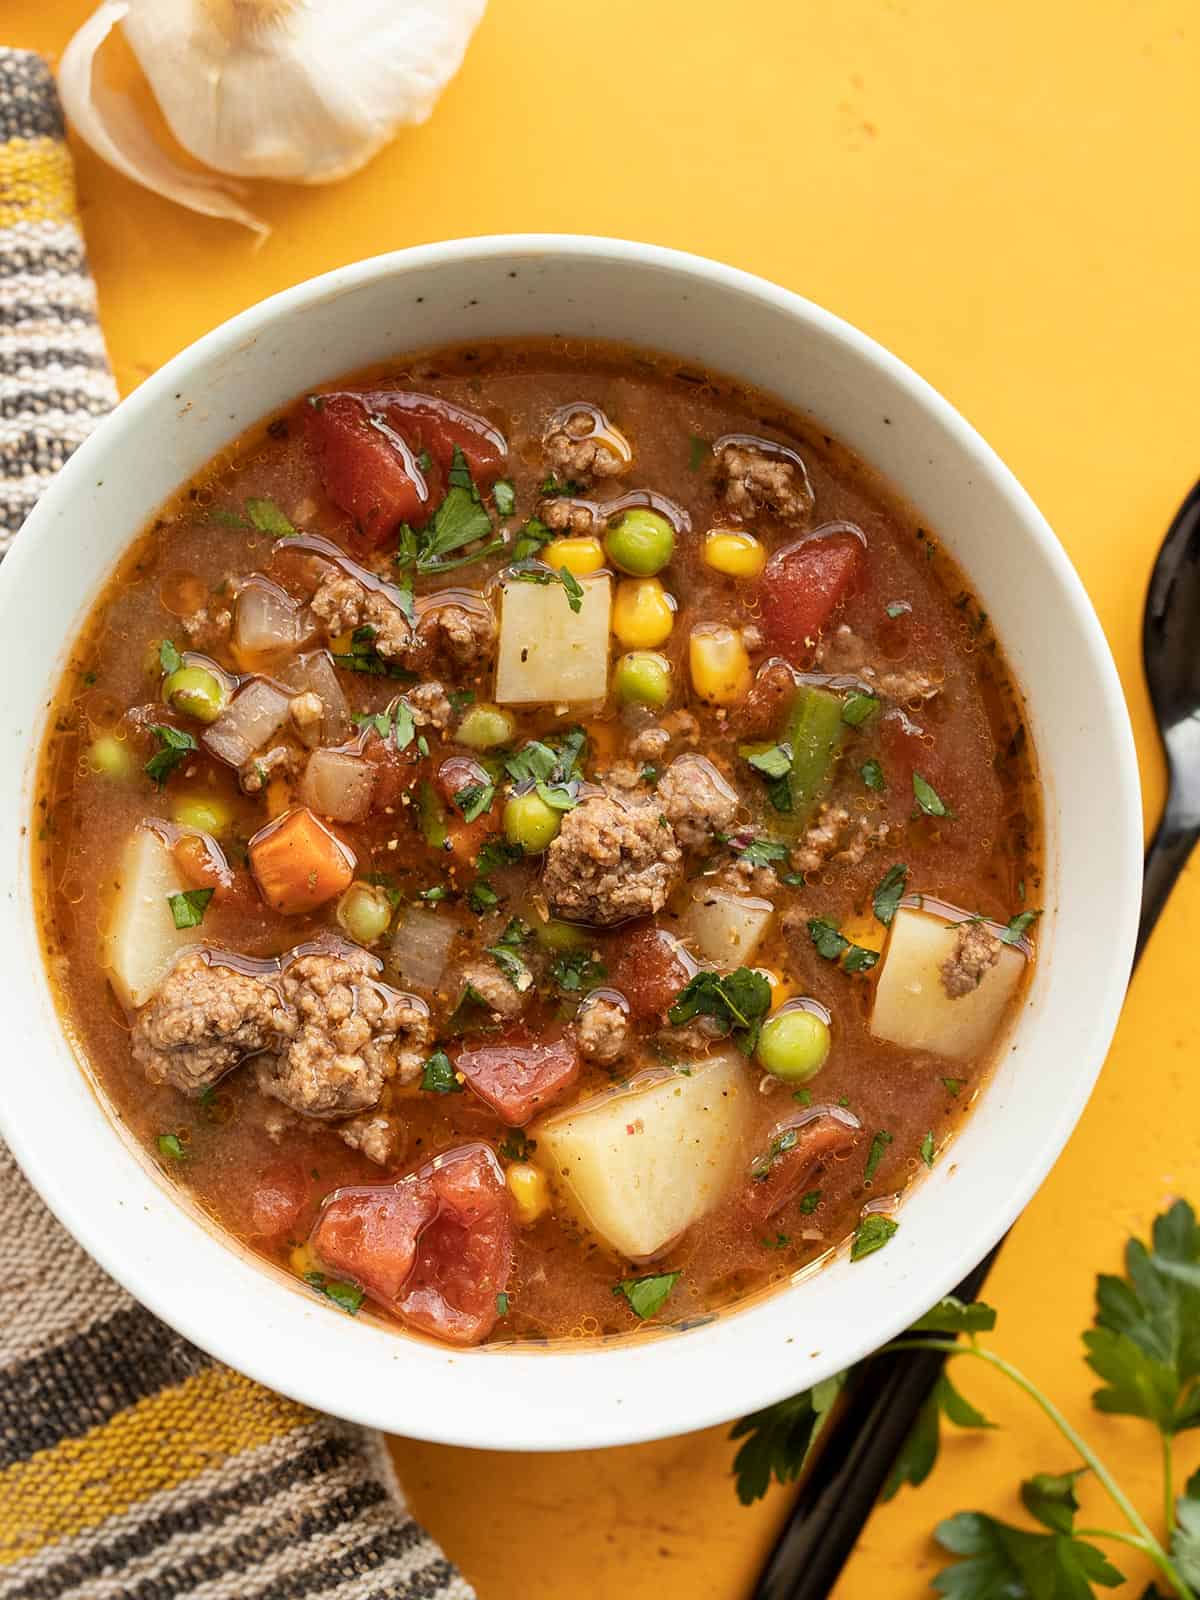 Crockpot vegetable beef soup recipe (+VIDEO) - Easy Soup Recipe